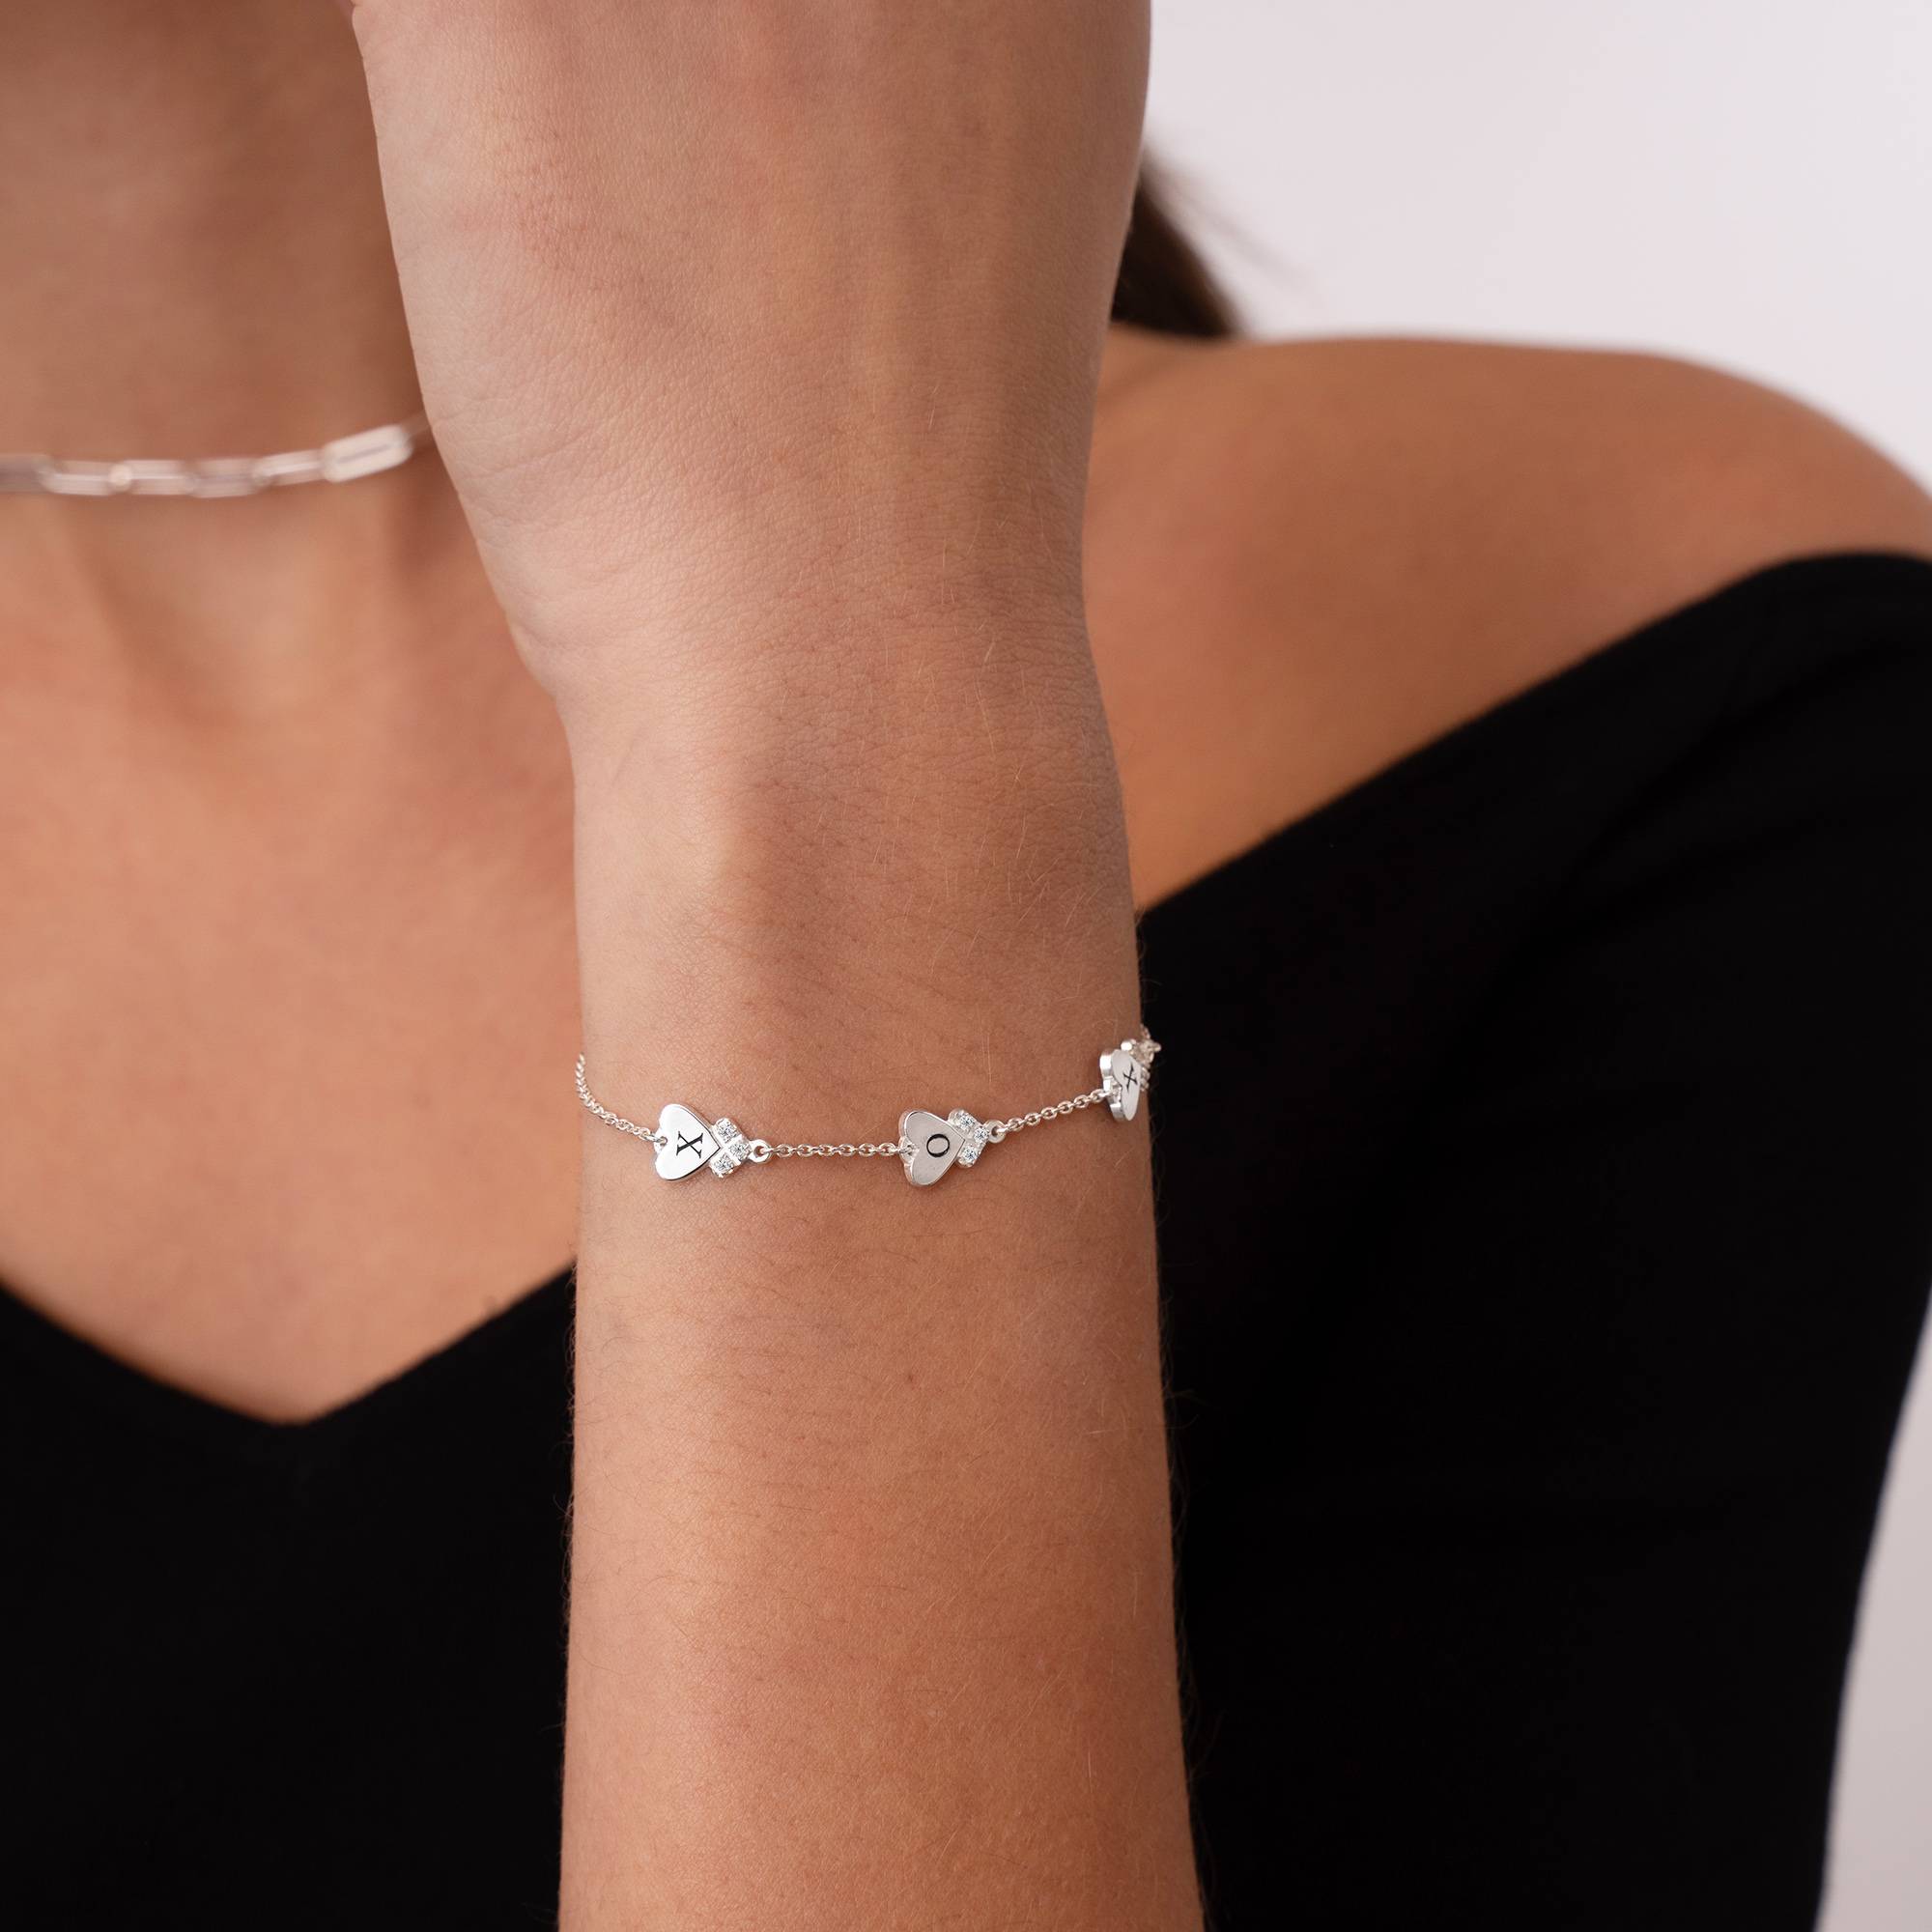 Dakota Heart Initial Bracelet with Diamonds in Sterling Silver-2 product photo